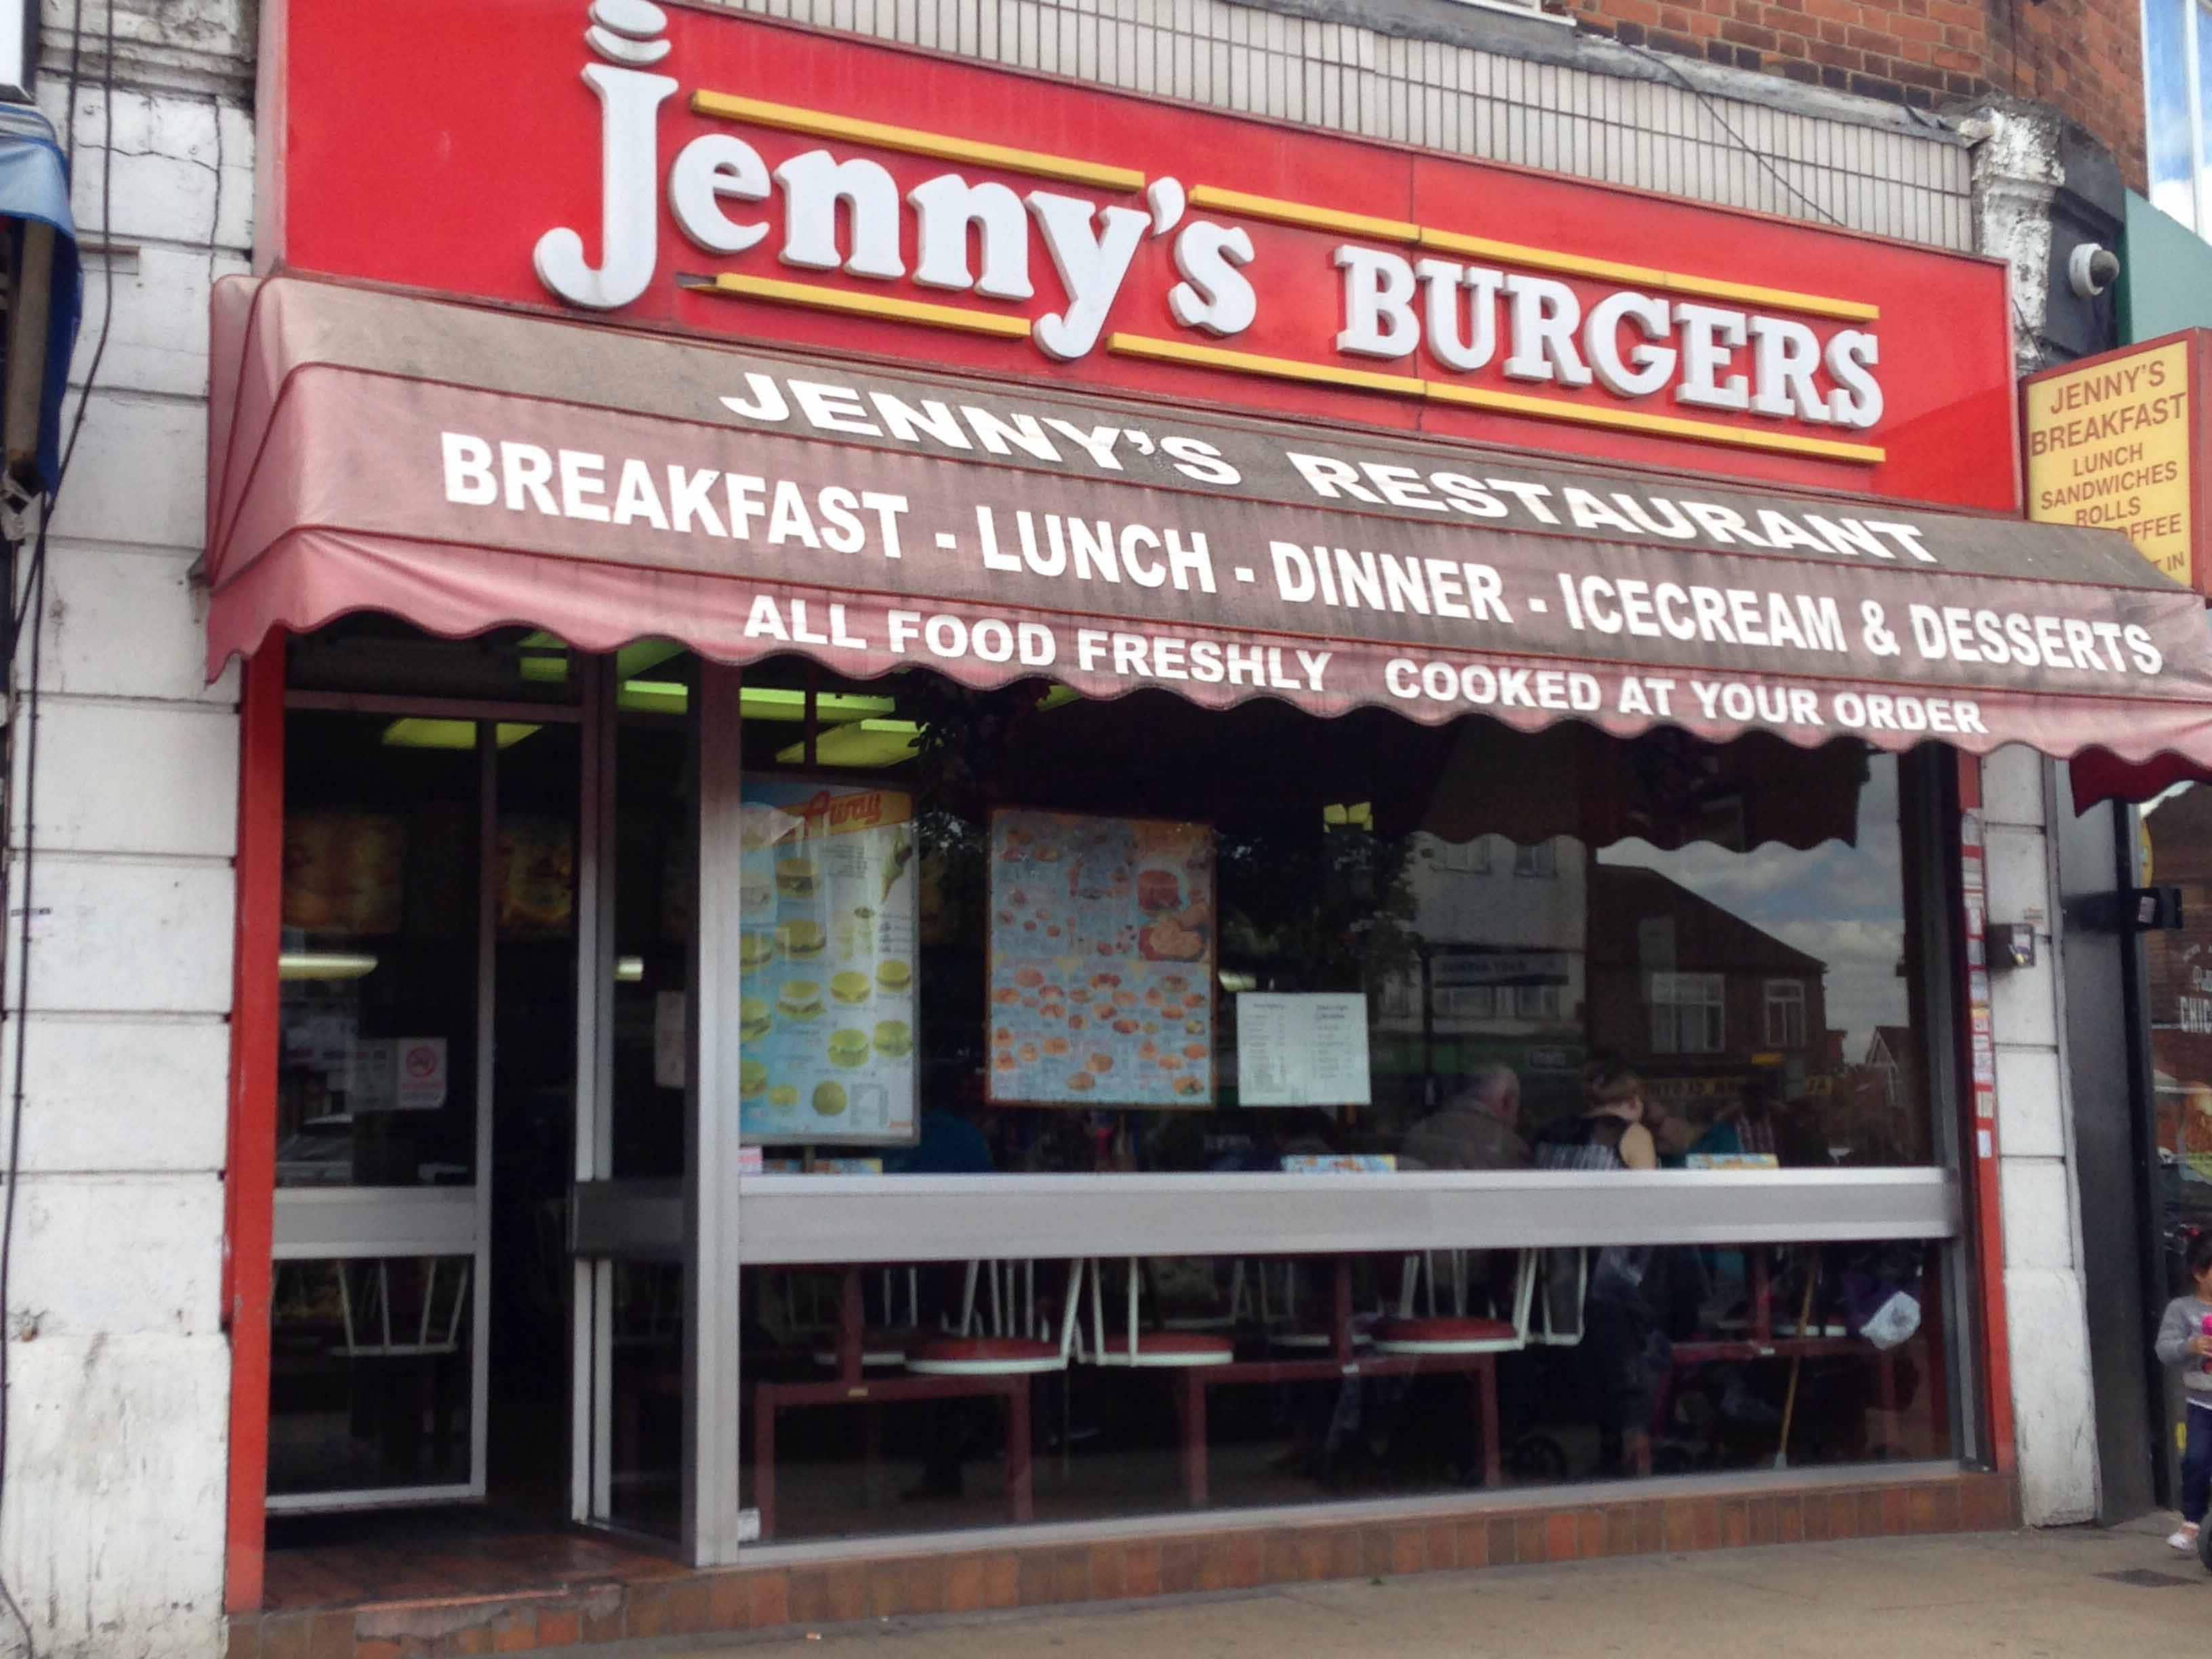 Menu of Jenny's Burger, Hayes, London